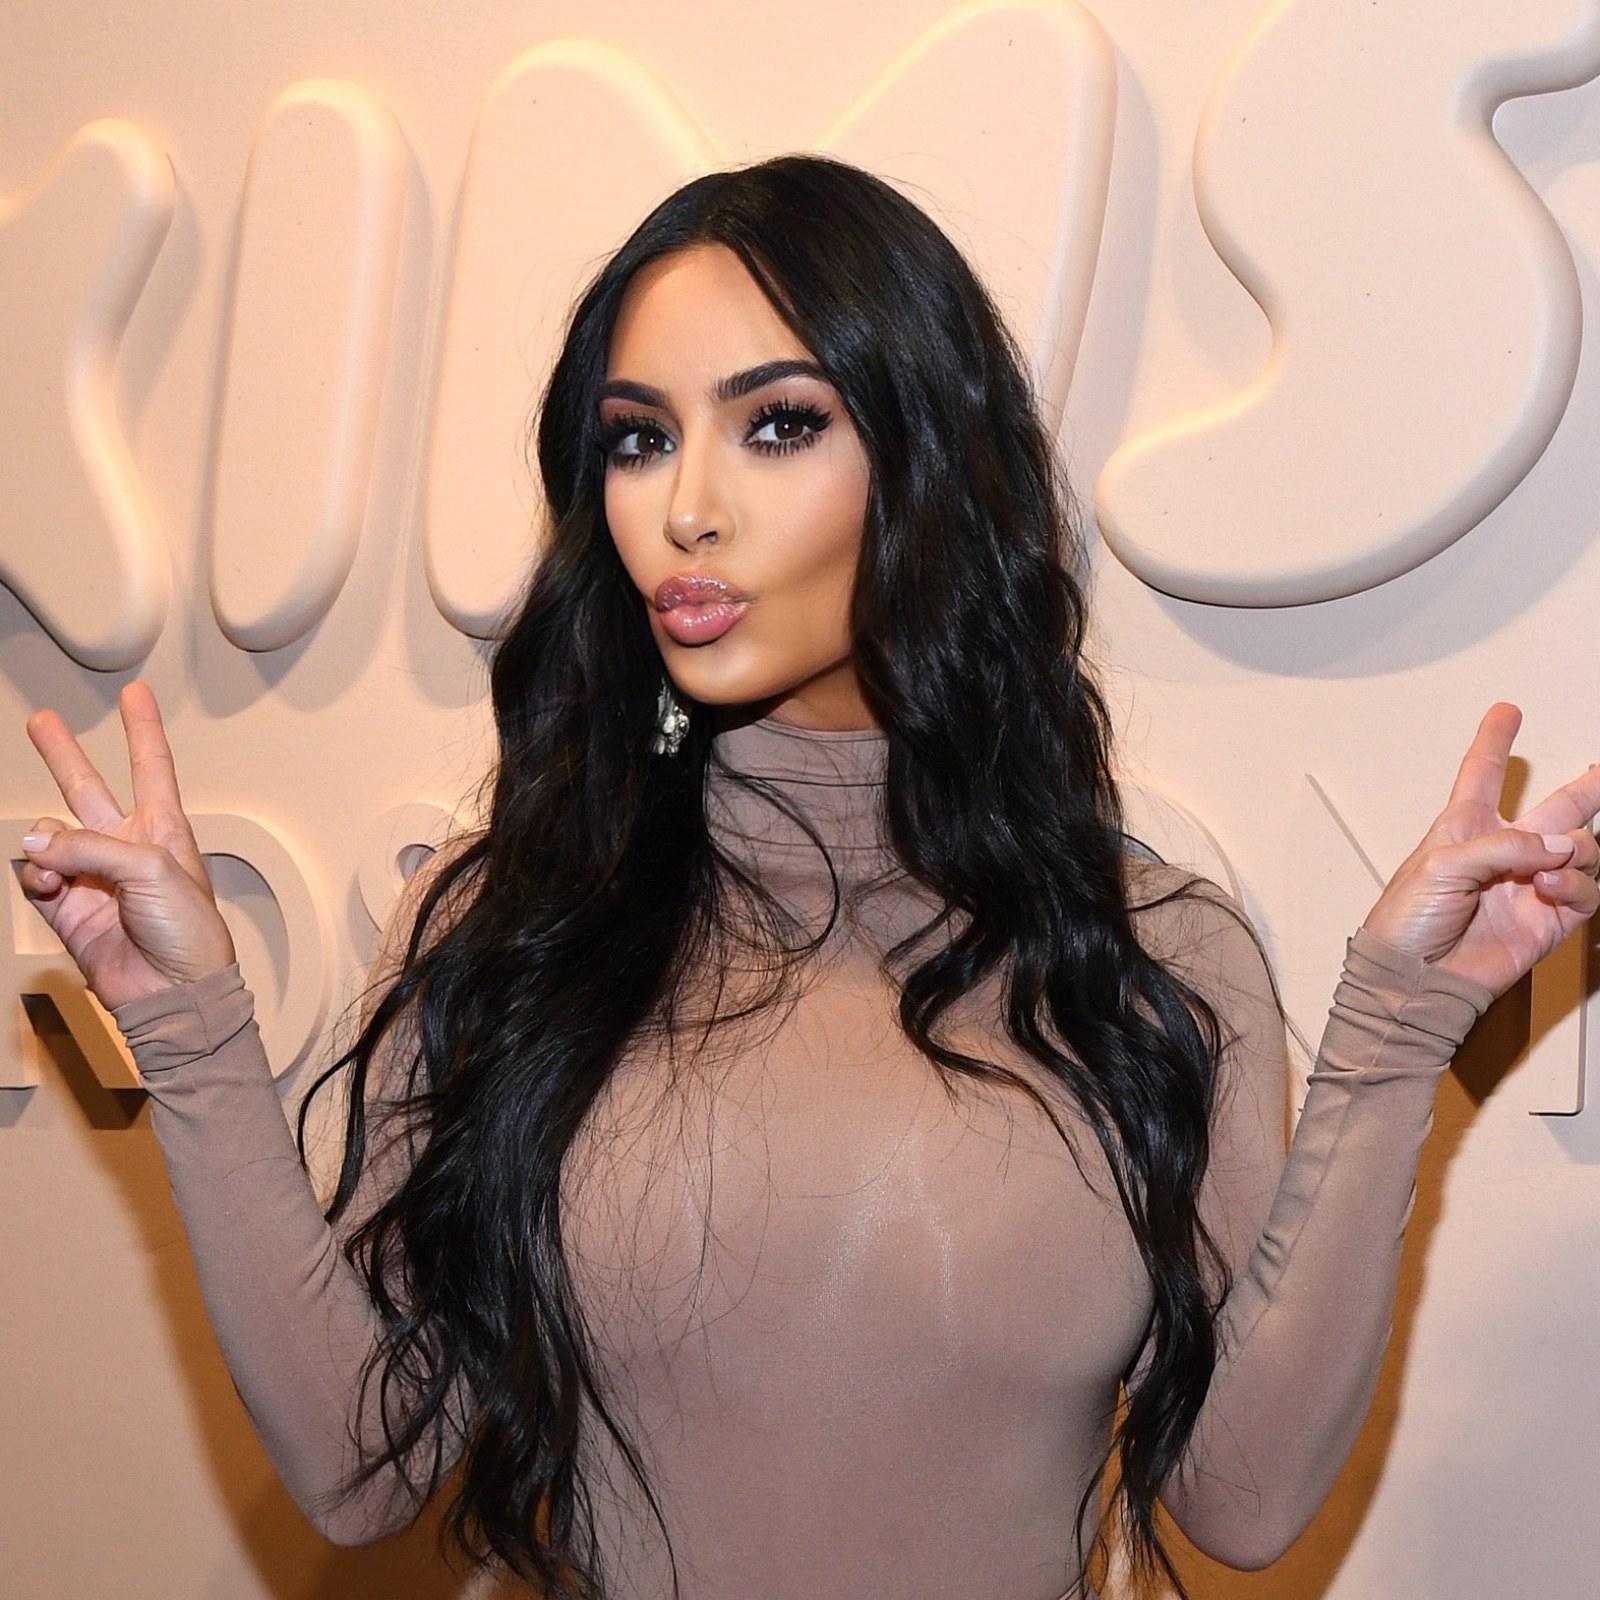 Kim Kardashian claims she never wore underwear until Skims